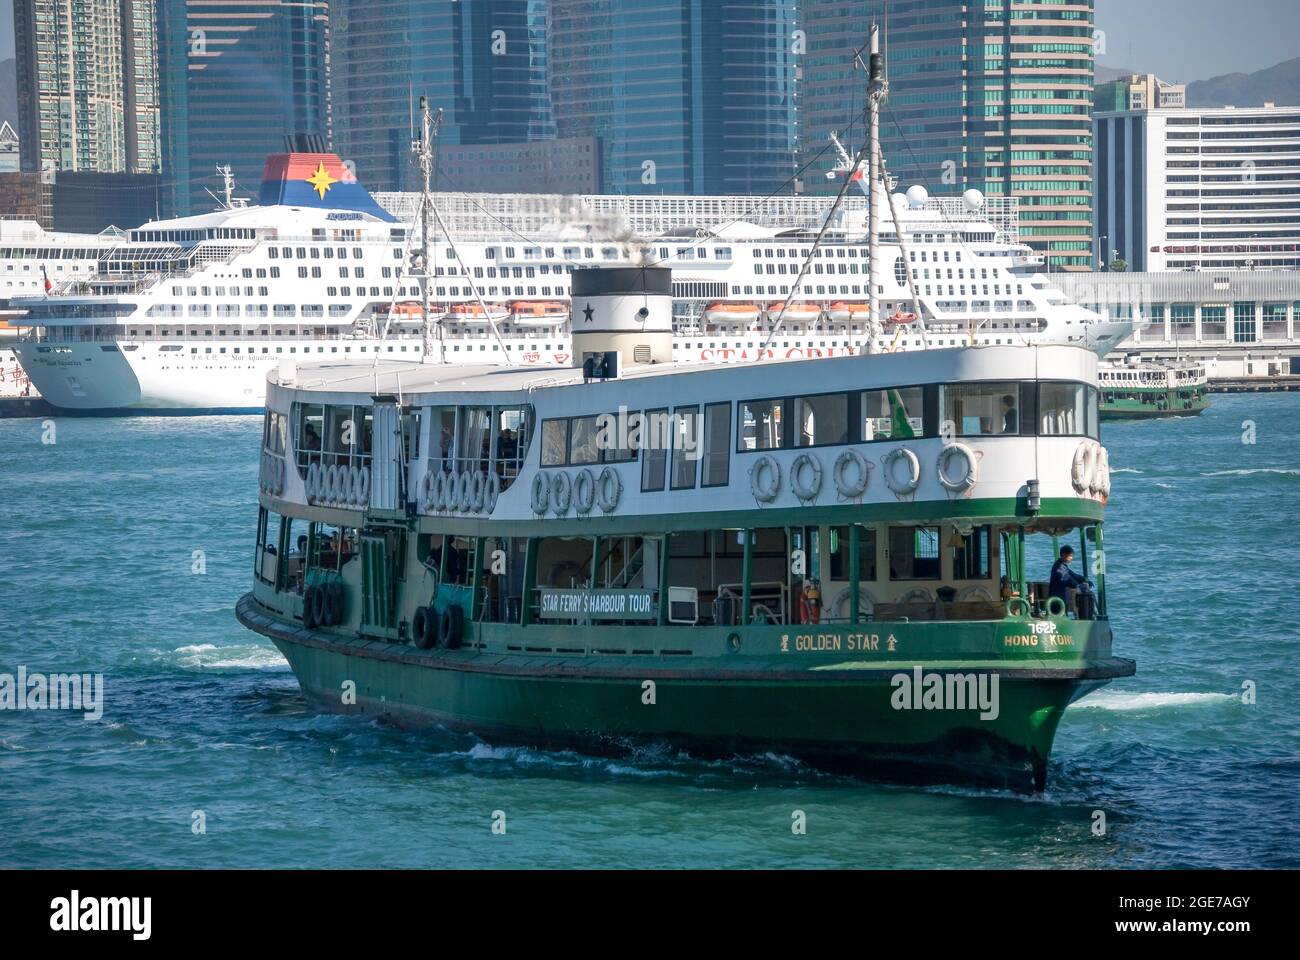 Traversata dei Traghetti Star da Tsim Sha Tsui, Molo Centrale, Sheung WAN, Victoria Harbour, Isola di Hong Kong, Hong Kong, Repubblica popolare cinese Foto Stock